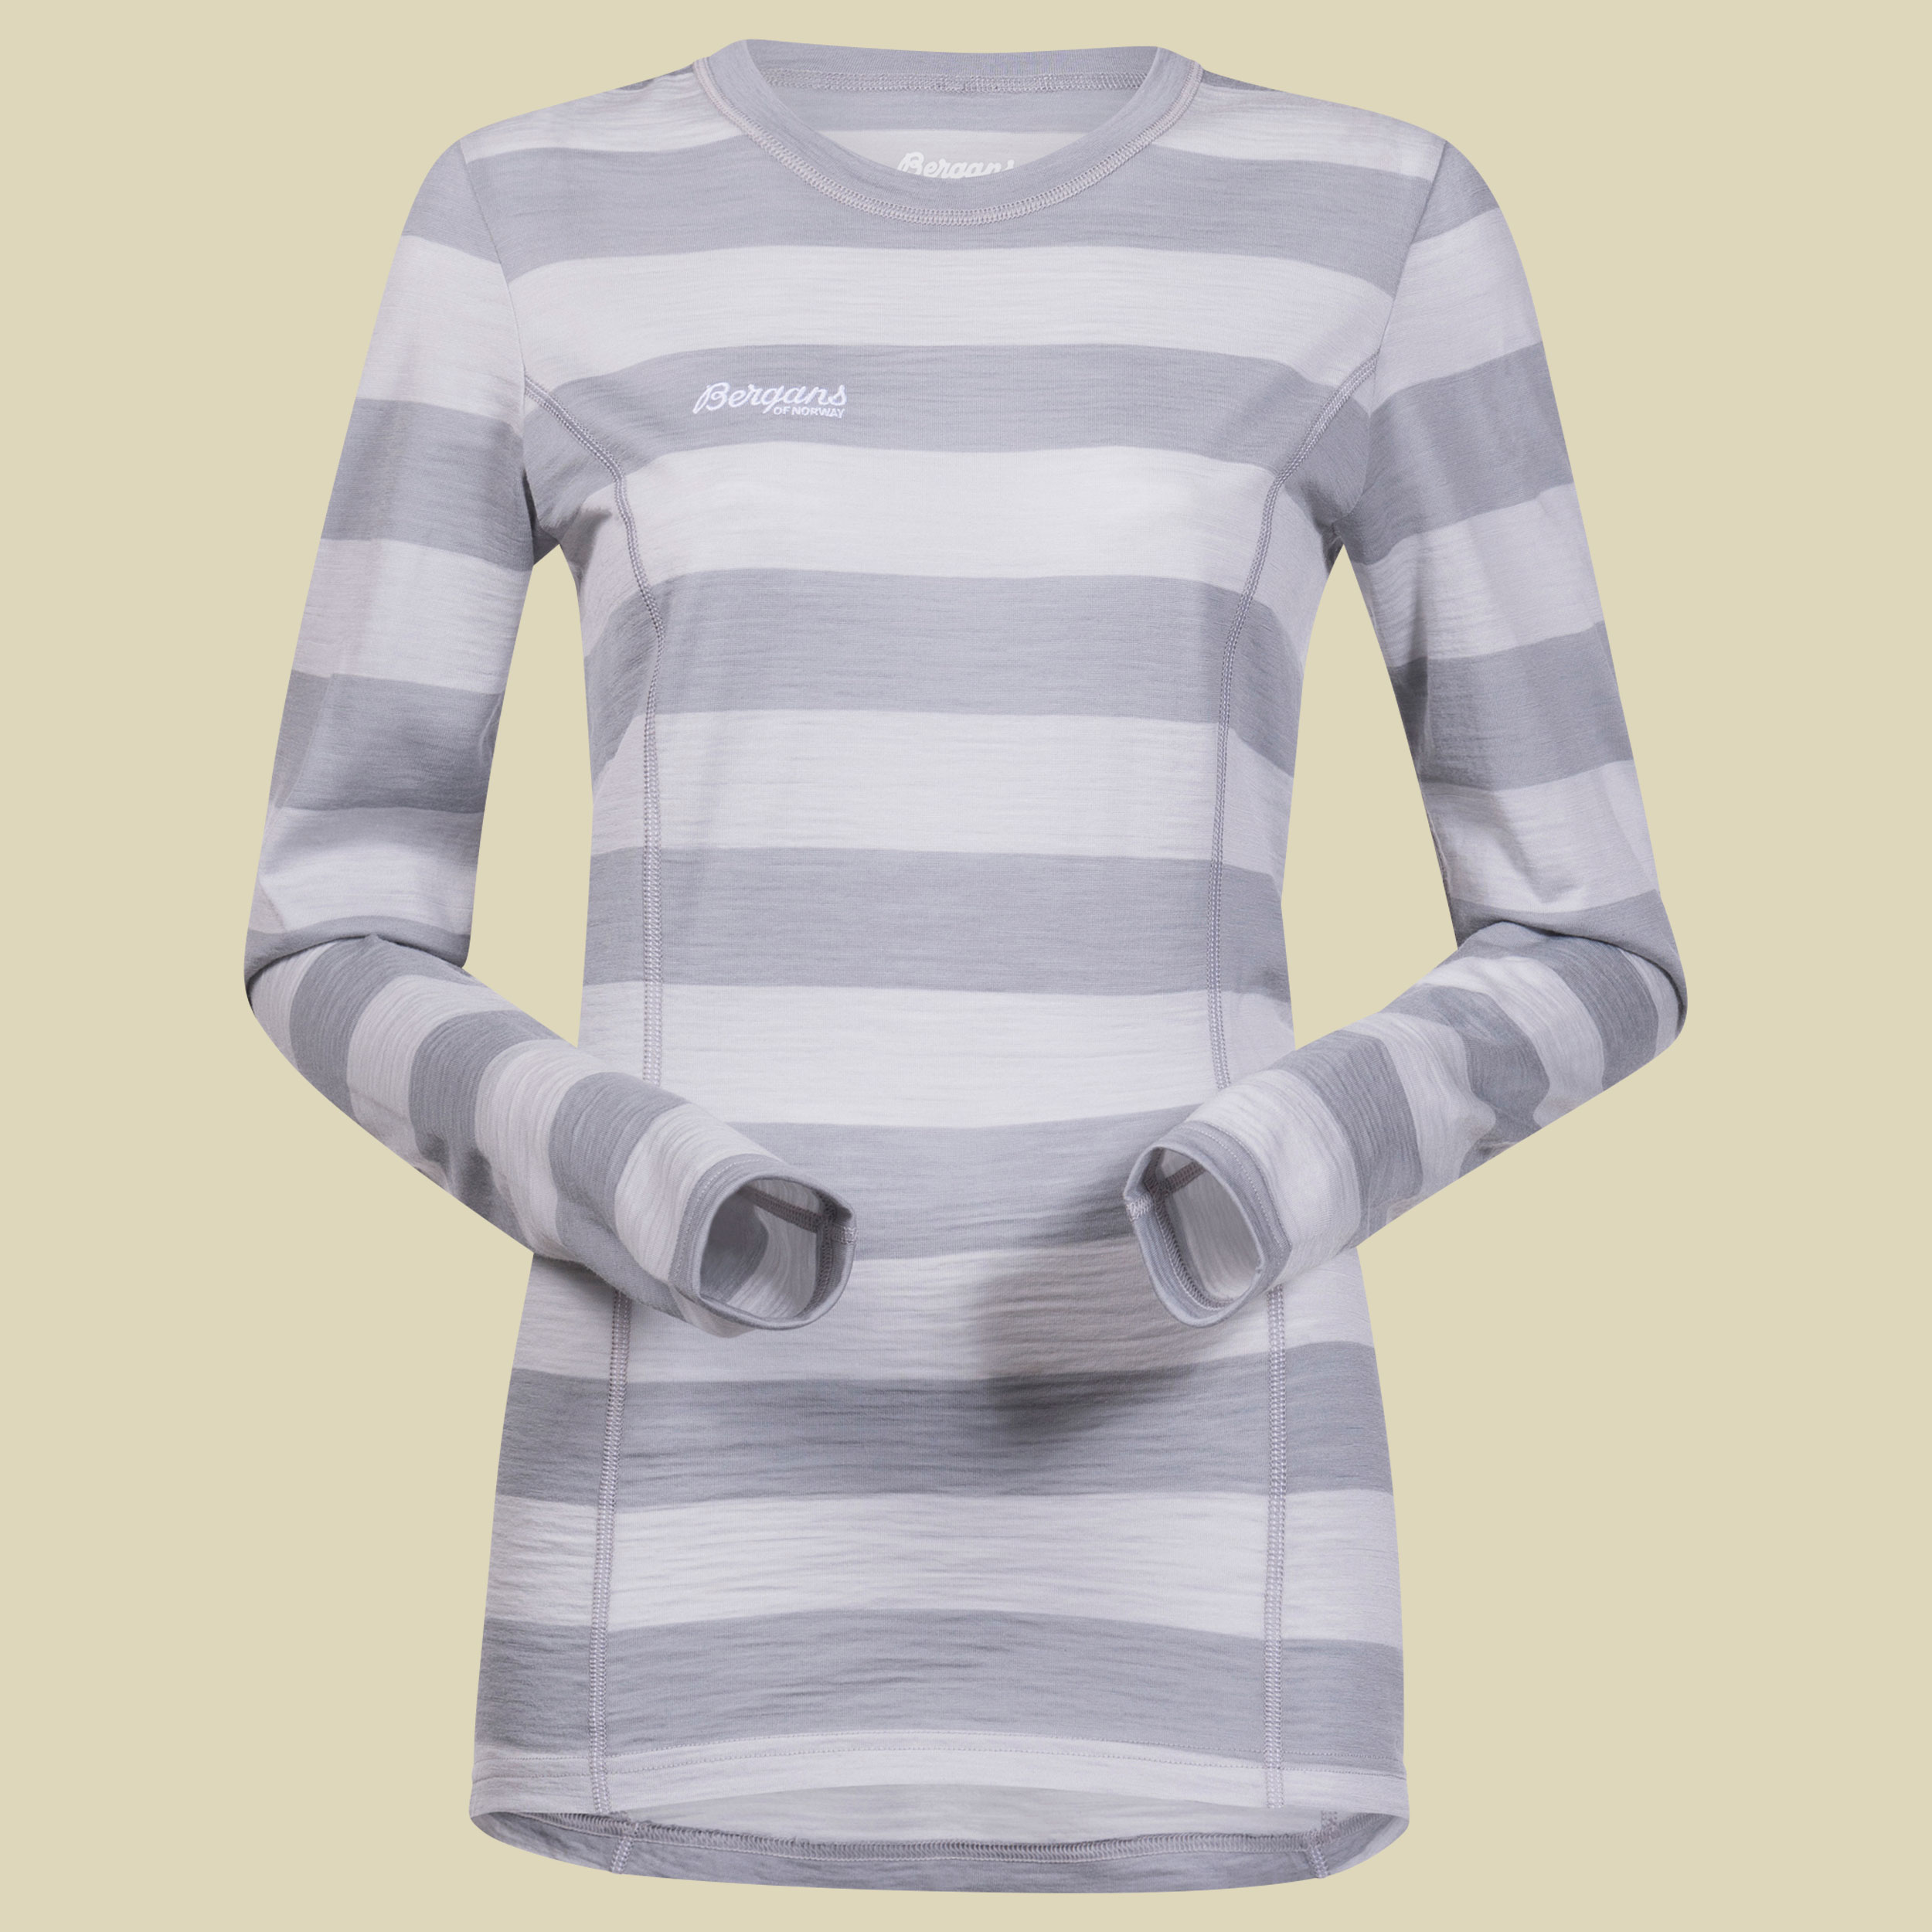 Soleie Lady Shirt Größe L Farbe aluminium/solid light grey striped